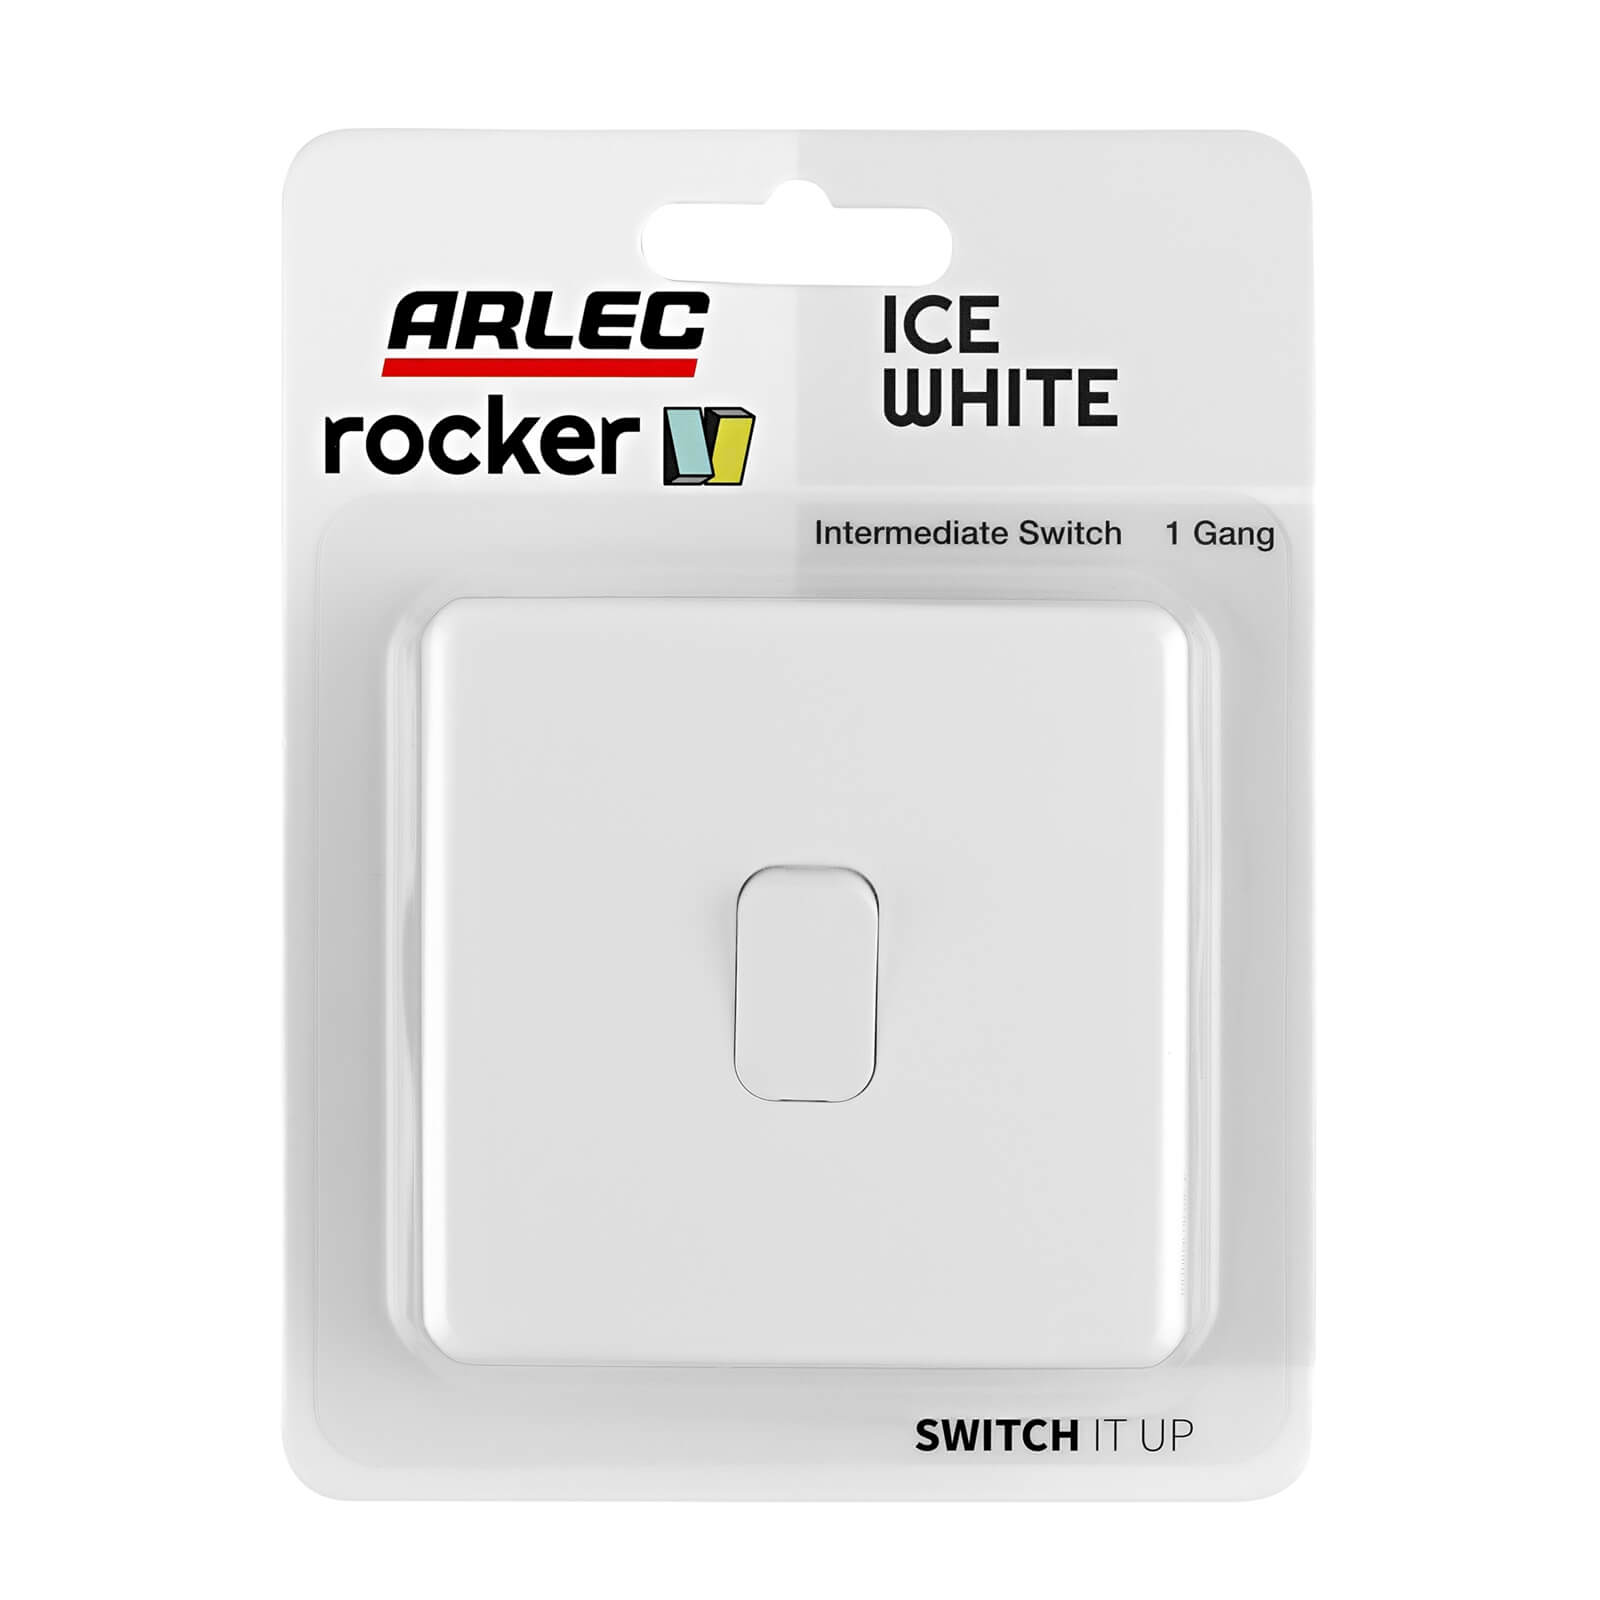 Arlec Rocker 10A 1Gang 2Way Ice White Single intermediate switch